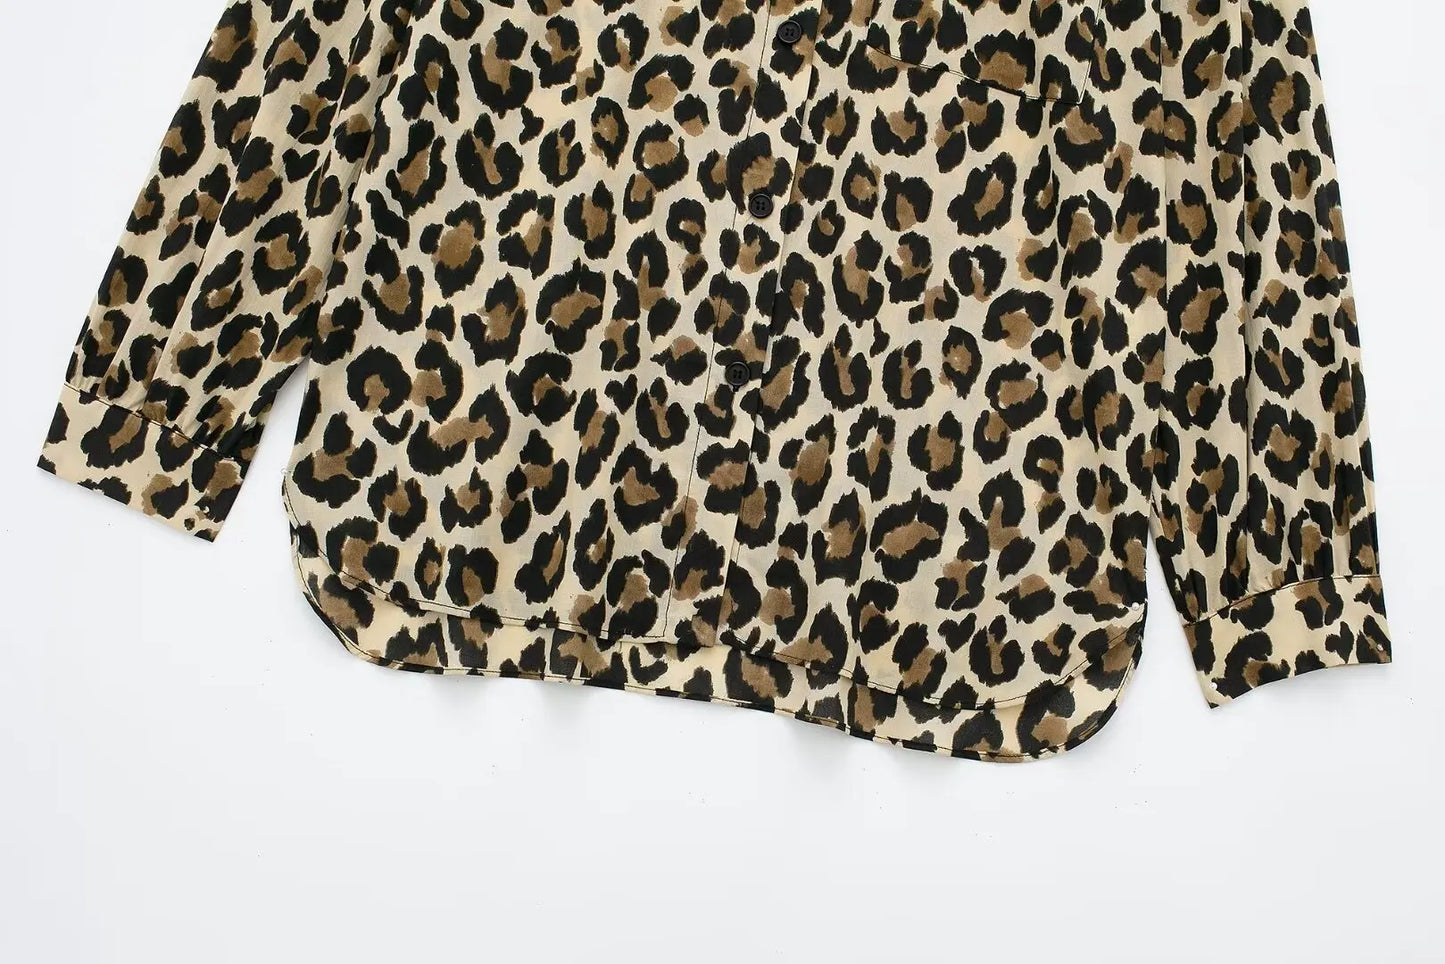 Leopard Print Shirts for Women